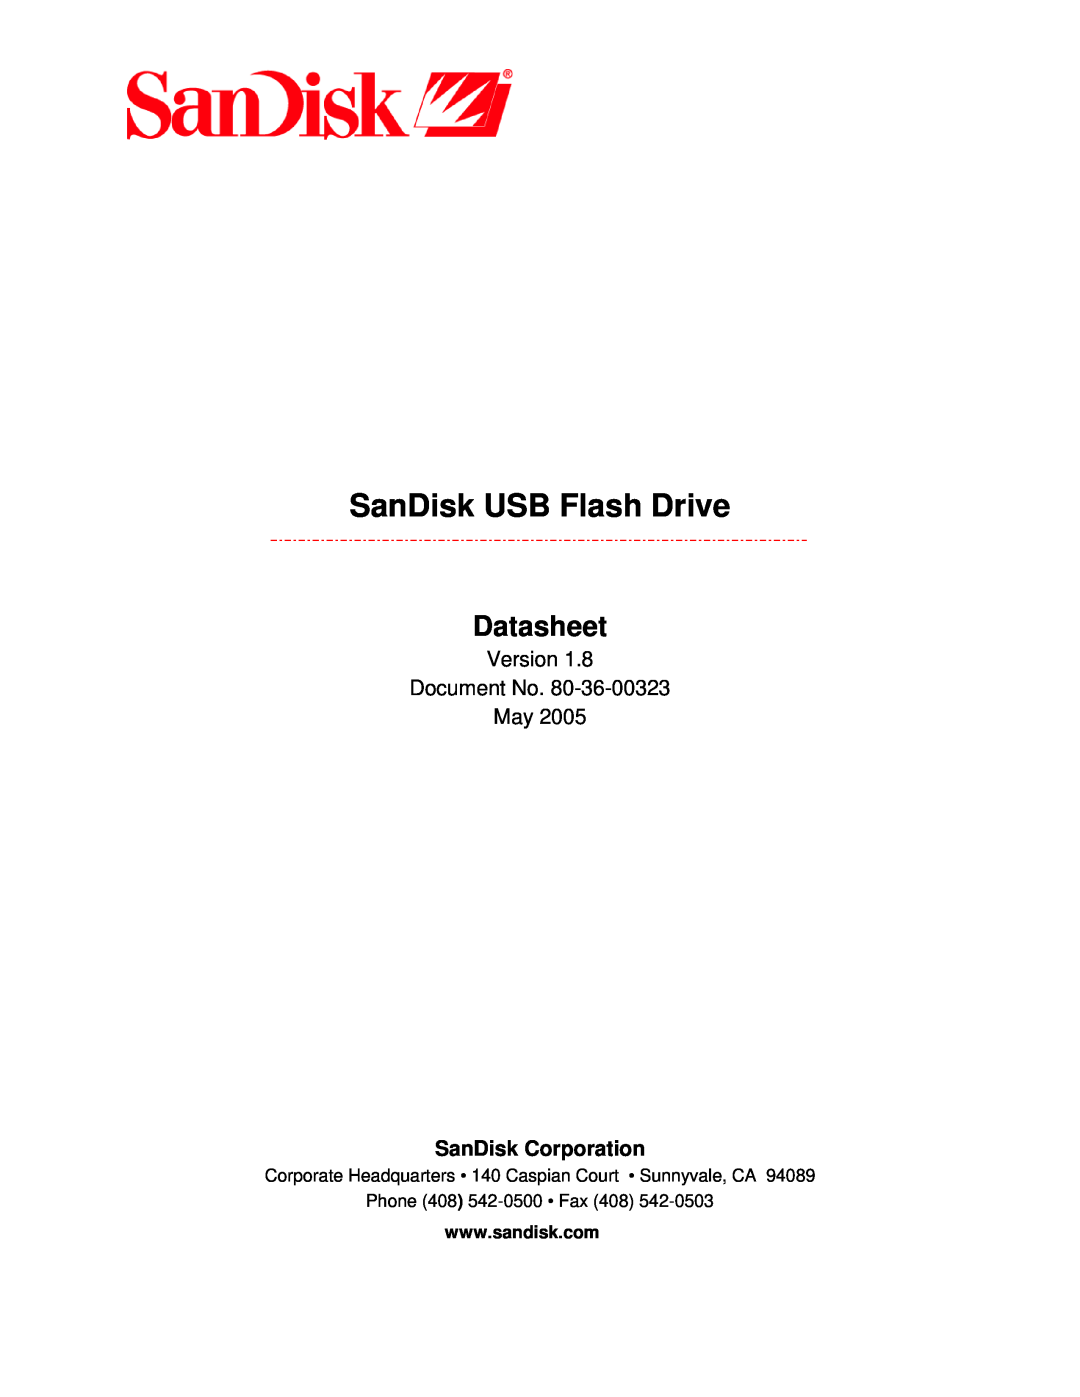 SanDisk SDUFD2AB-0256, 80-36-00323 manual SanDisk Corporation, SanDisk USB Flash Drive, Datasheet, Version Document No May 